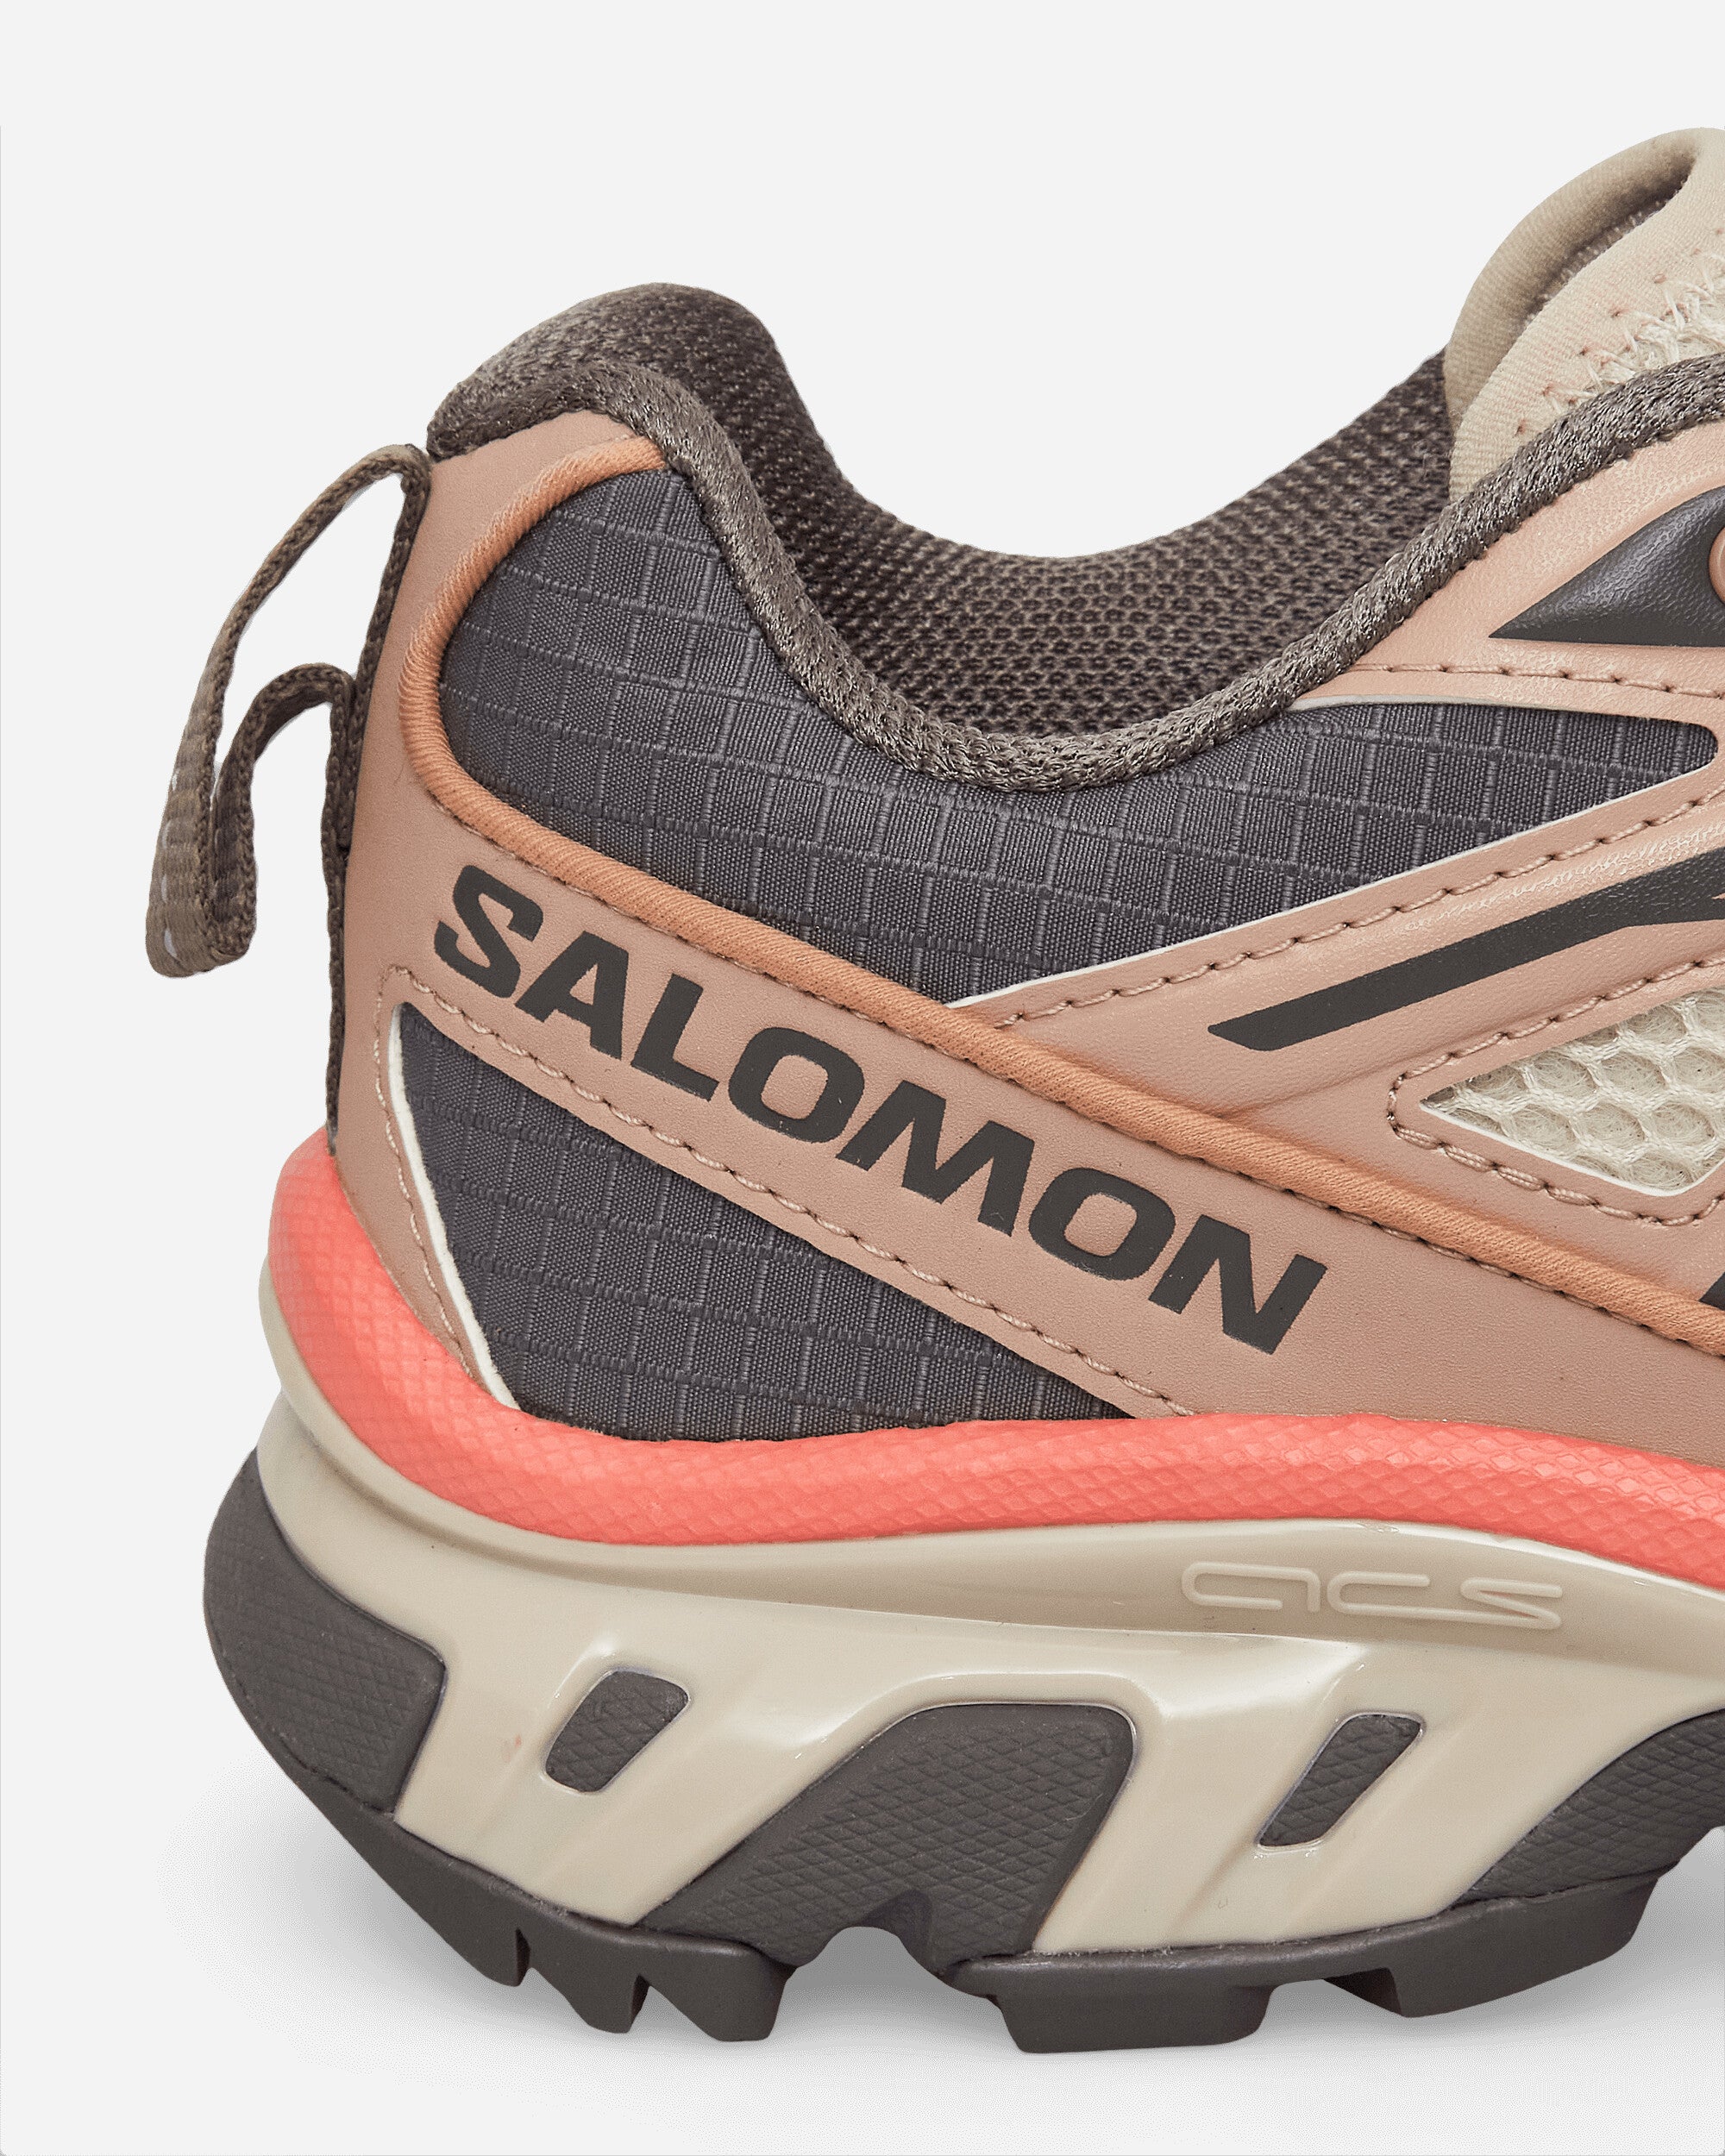 Salomon Xt-6 Expanse Seasonal Natural/Cement Sneakers Low L47468000